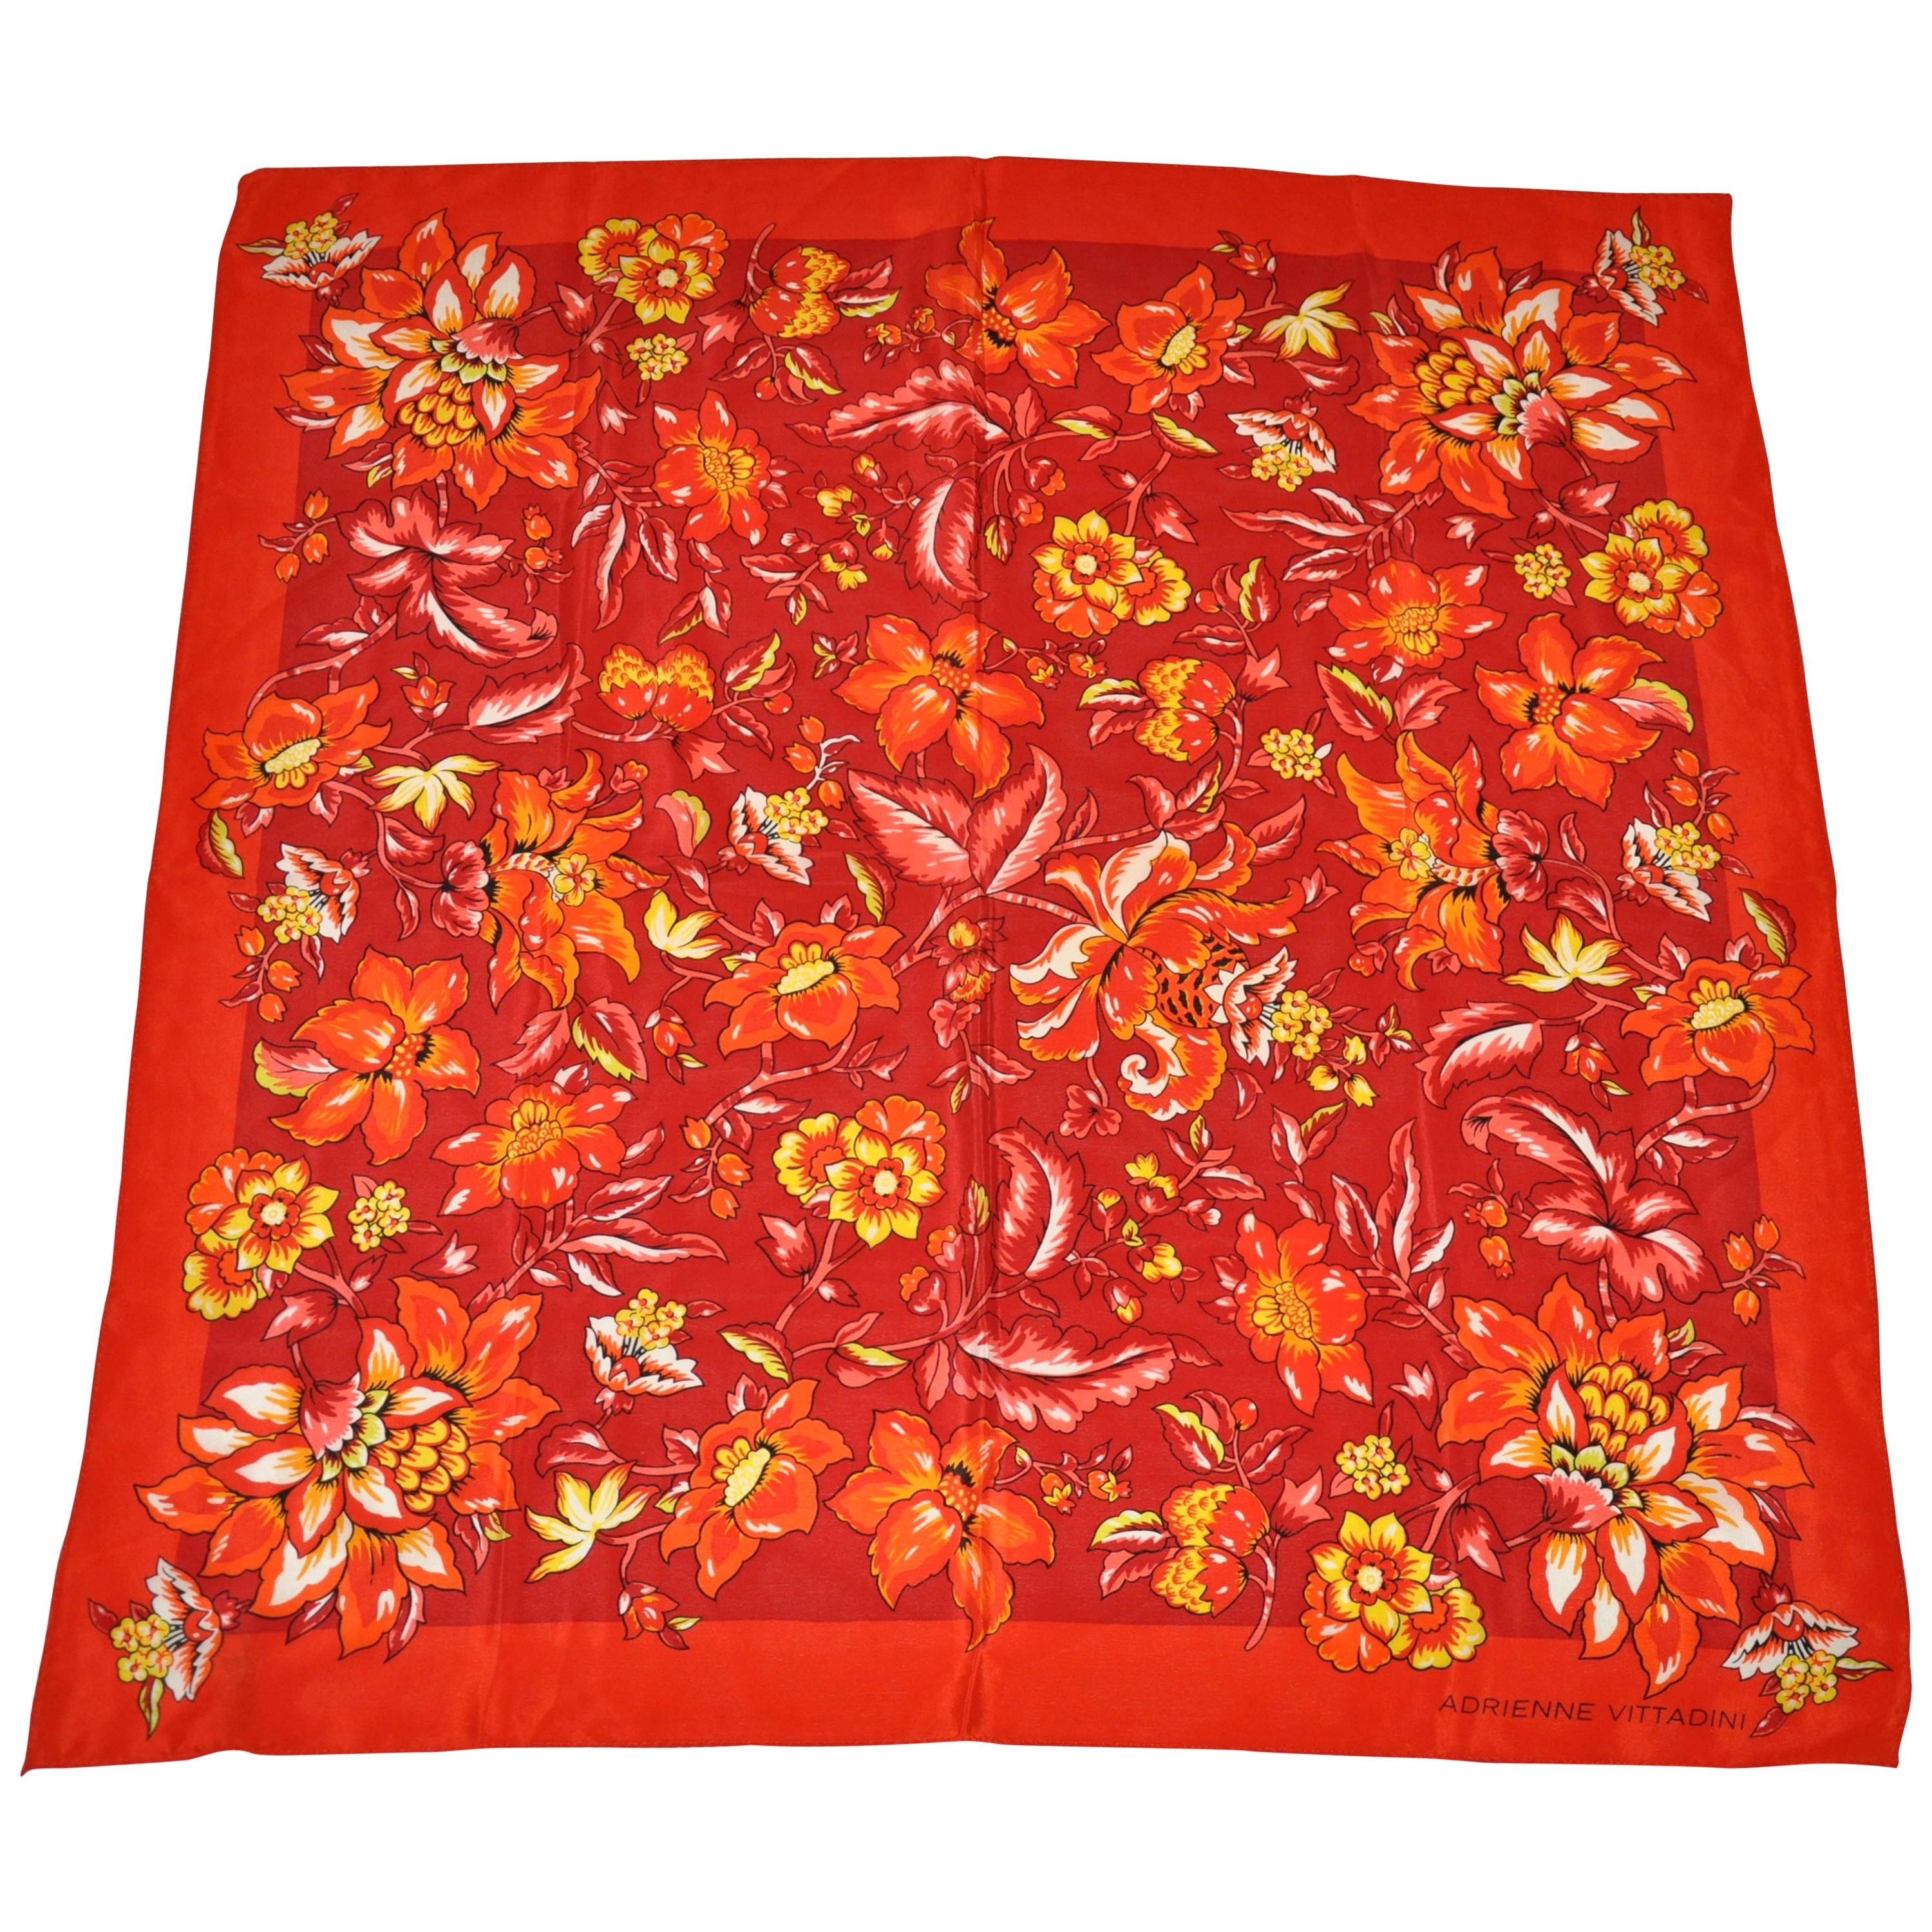 Adrienne Vittadini Wonderfully Glorious Floral Silk Scarf For Sale